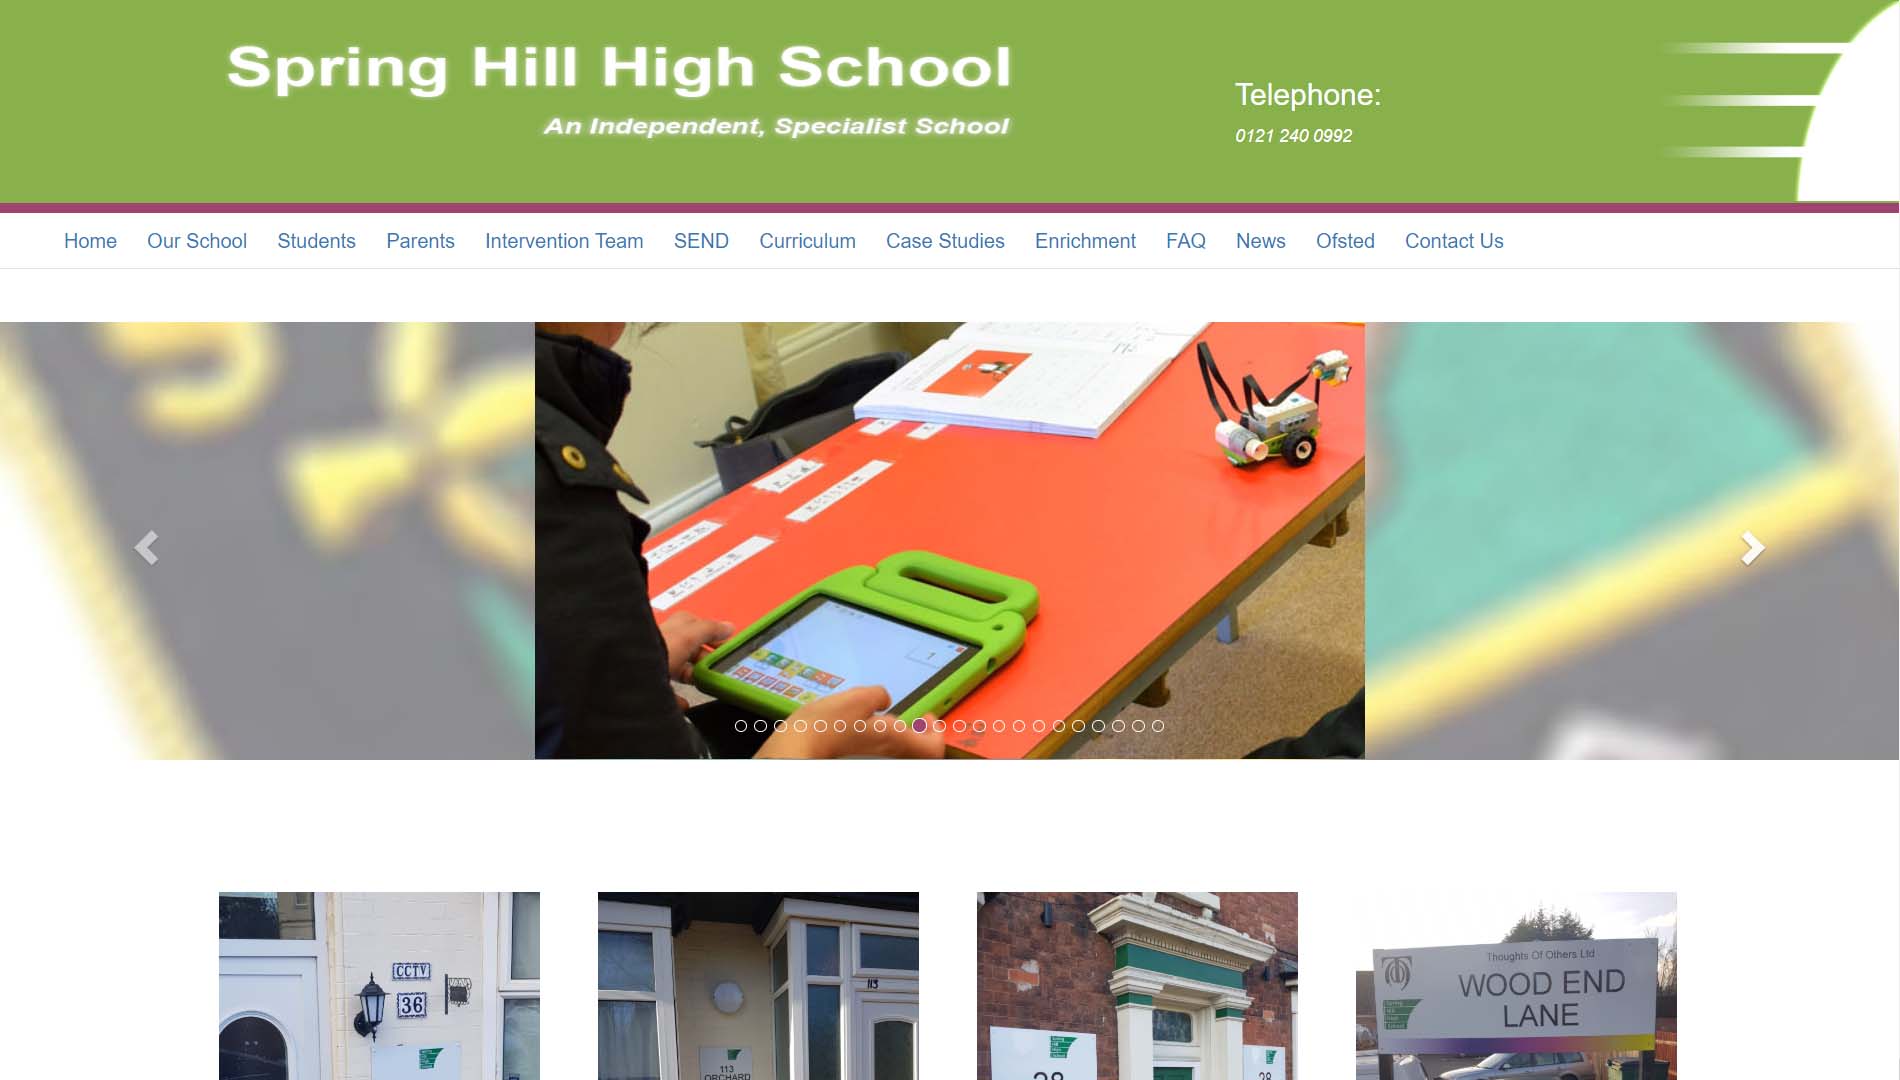 Spring Hill High School